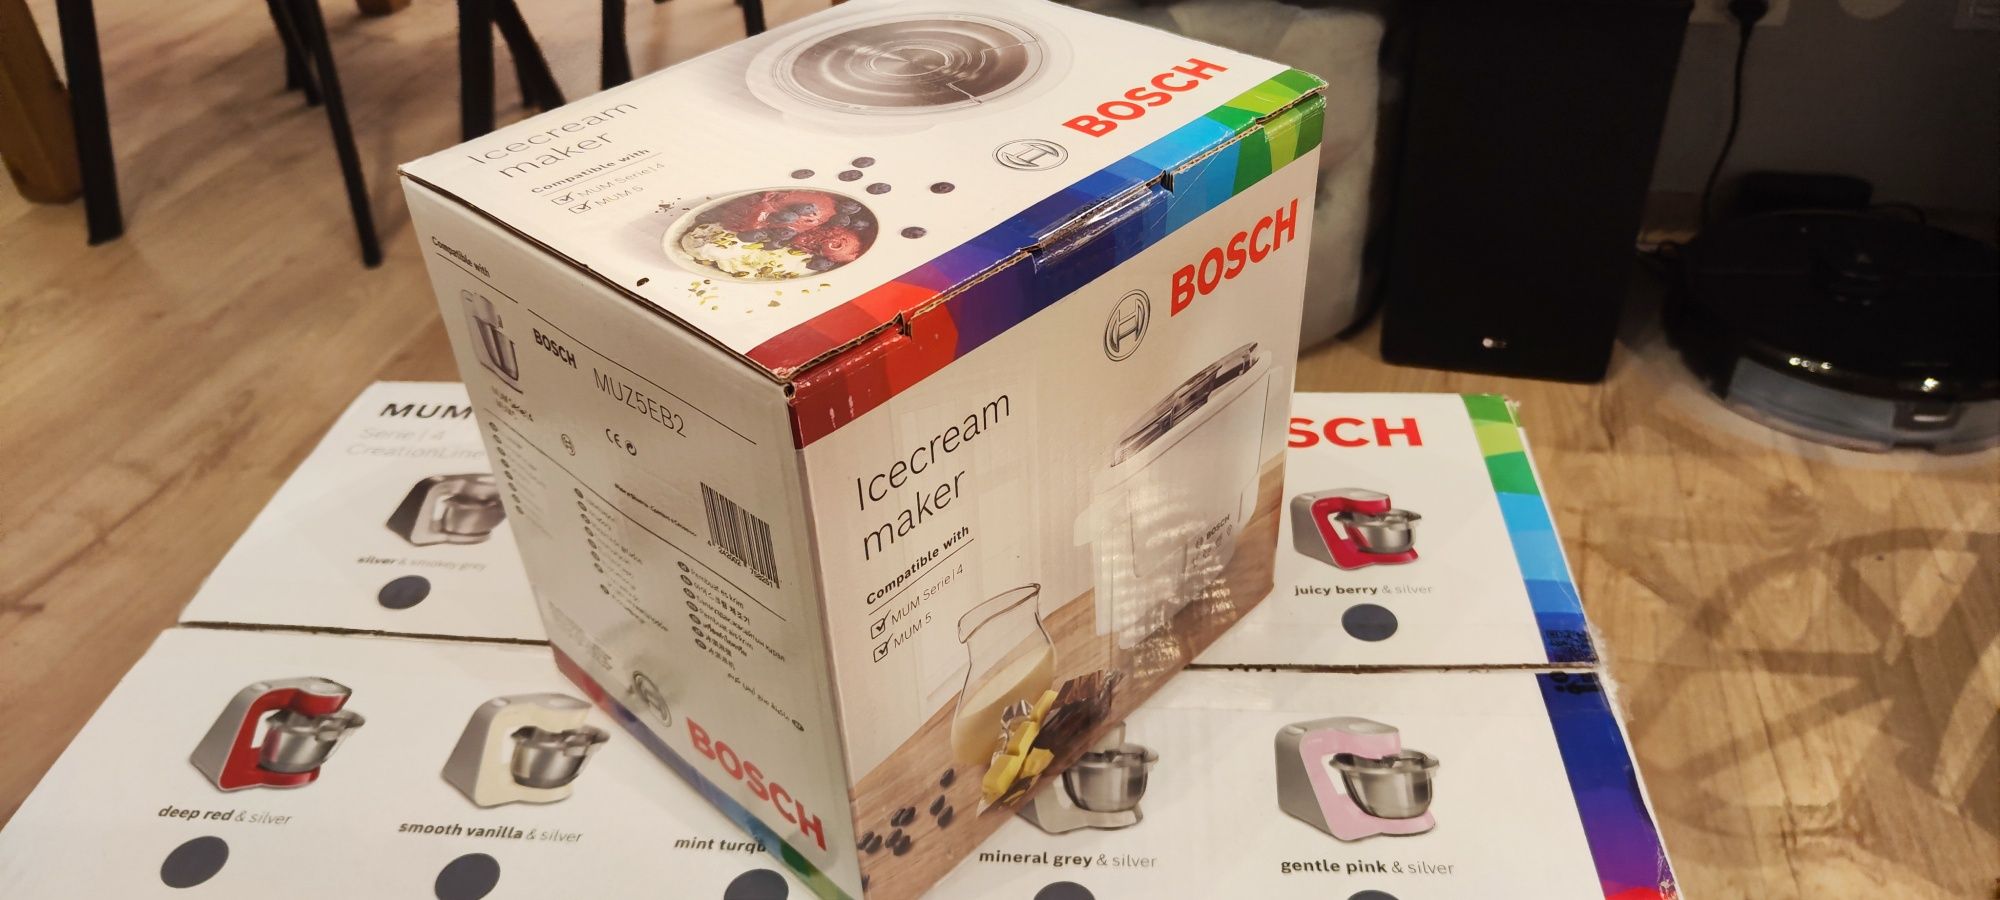 NOWY Robot kuchenny planetarny Bosch MUM 58258 plus gratis